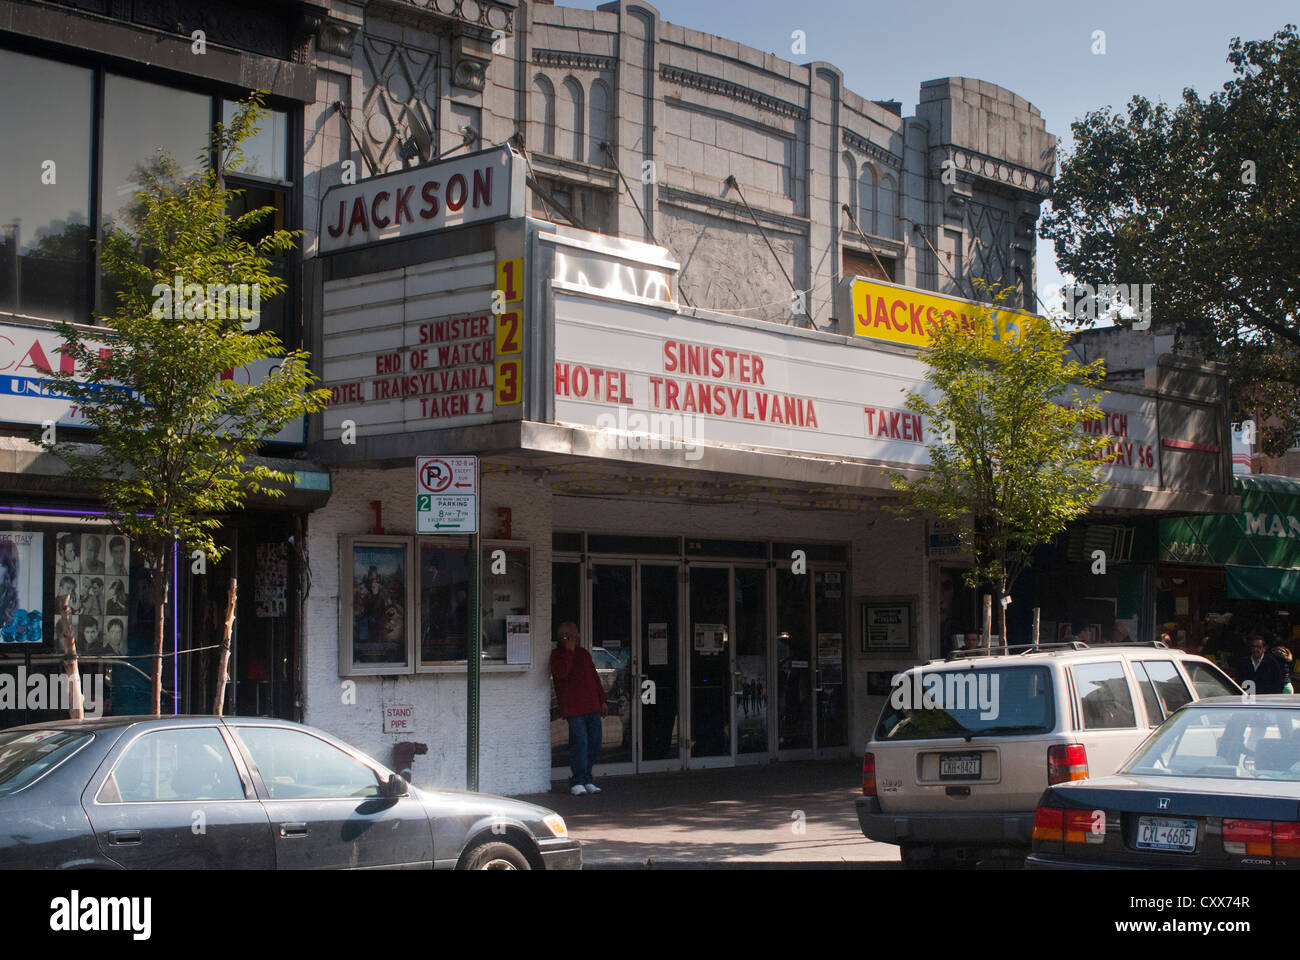 The Jackson Heights Cinema triplex in the Jackson Heights neighborhood of Queens in New York Stock Photo